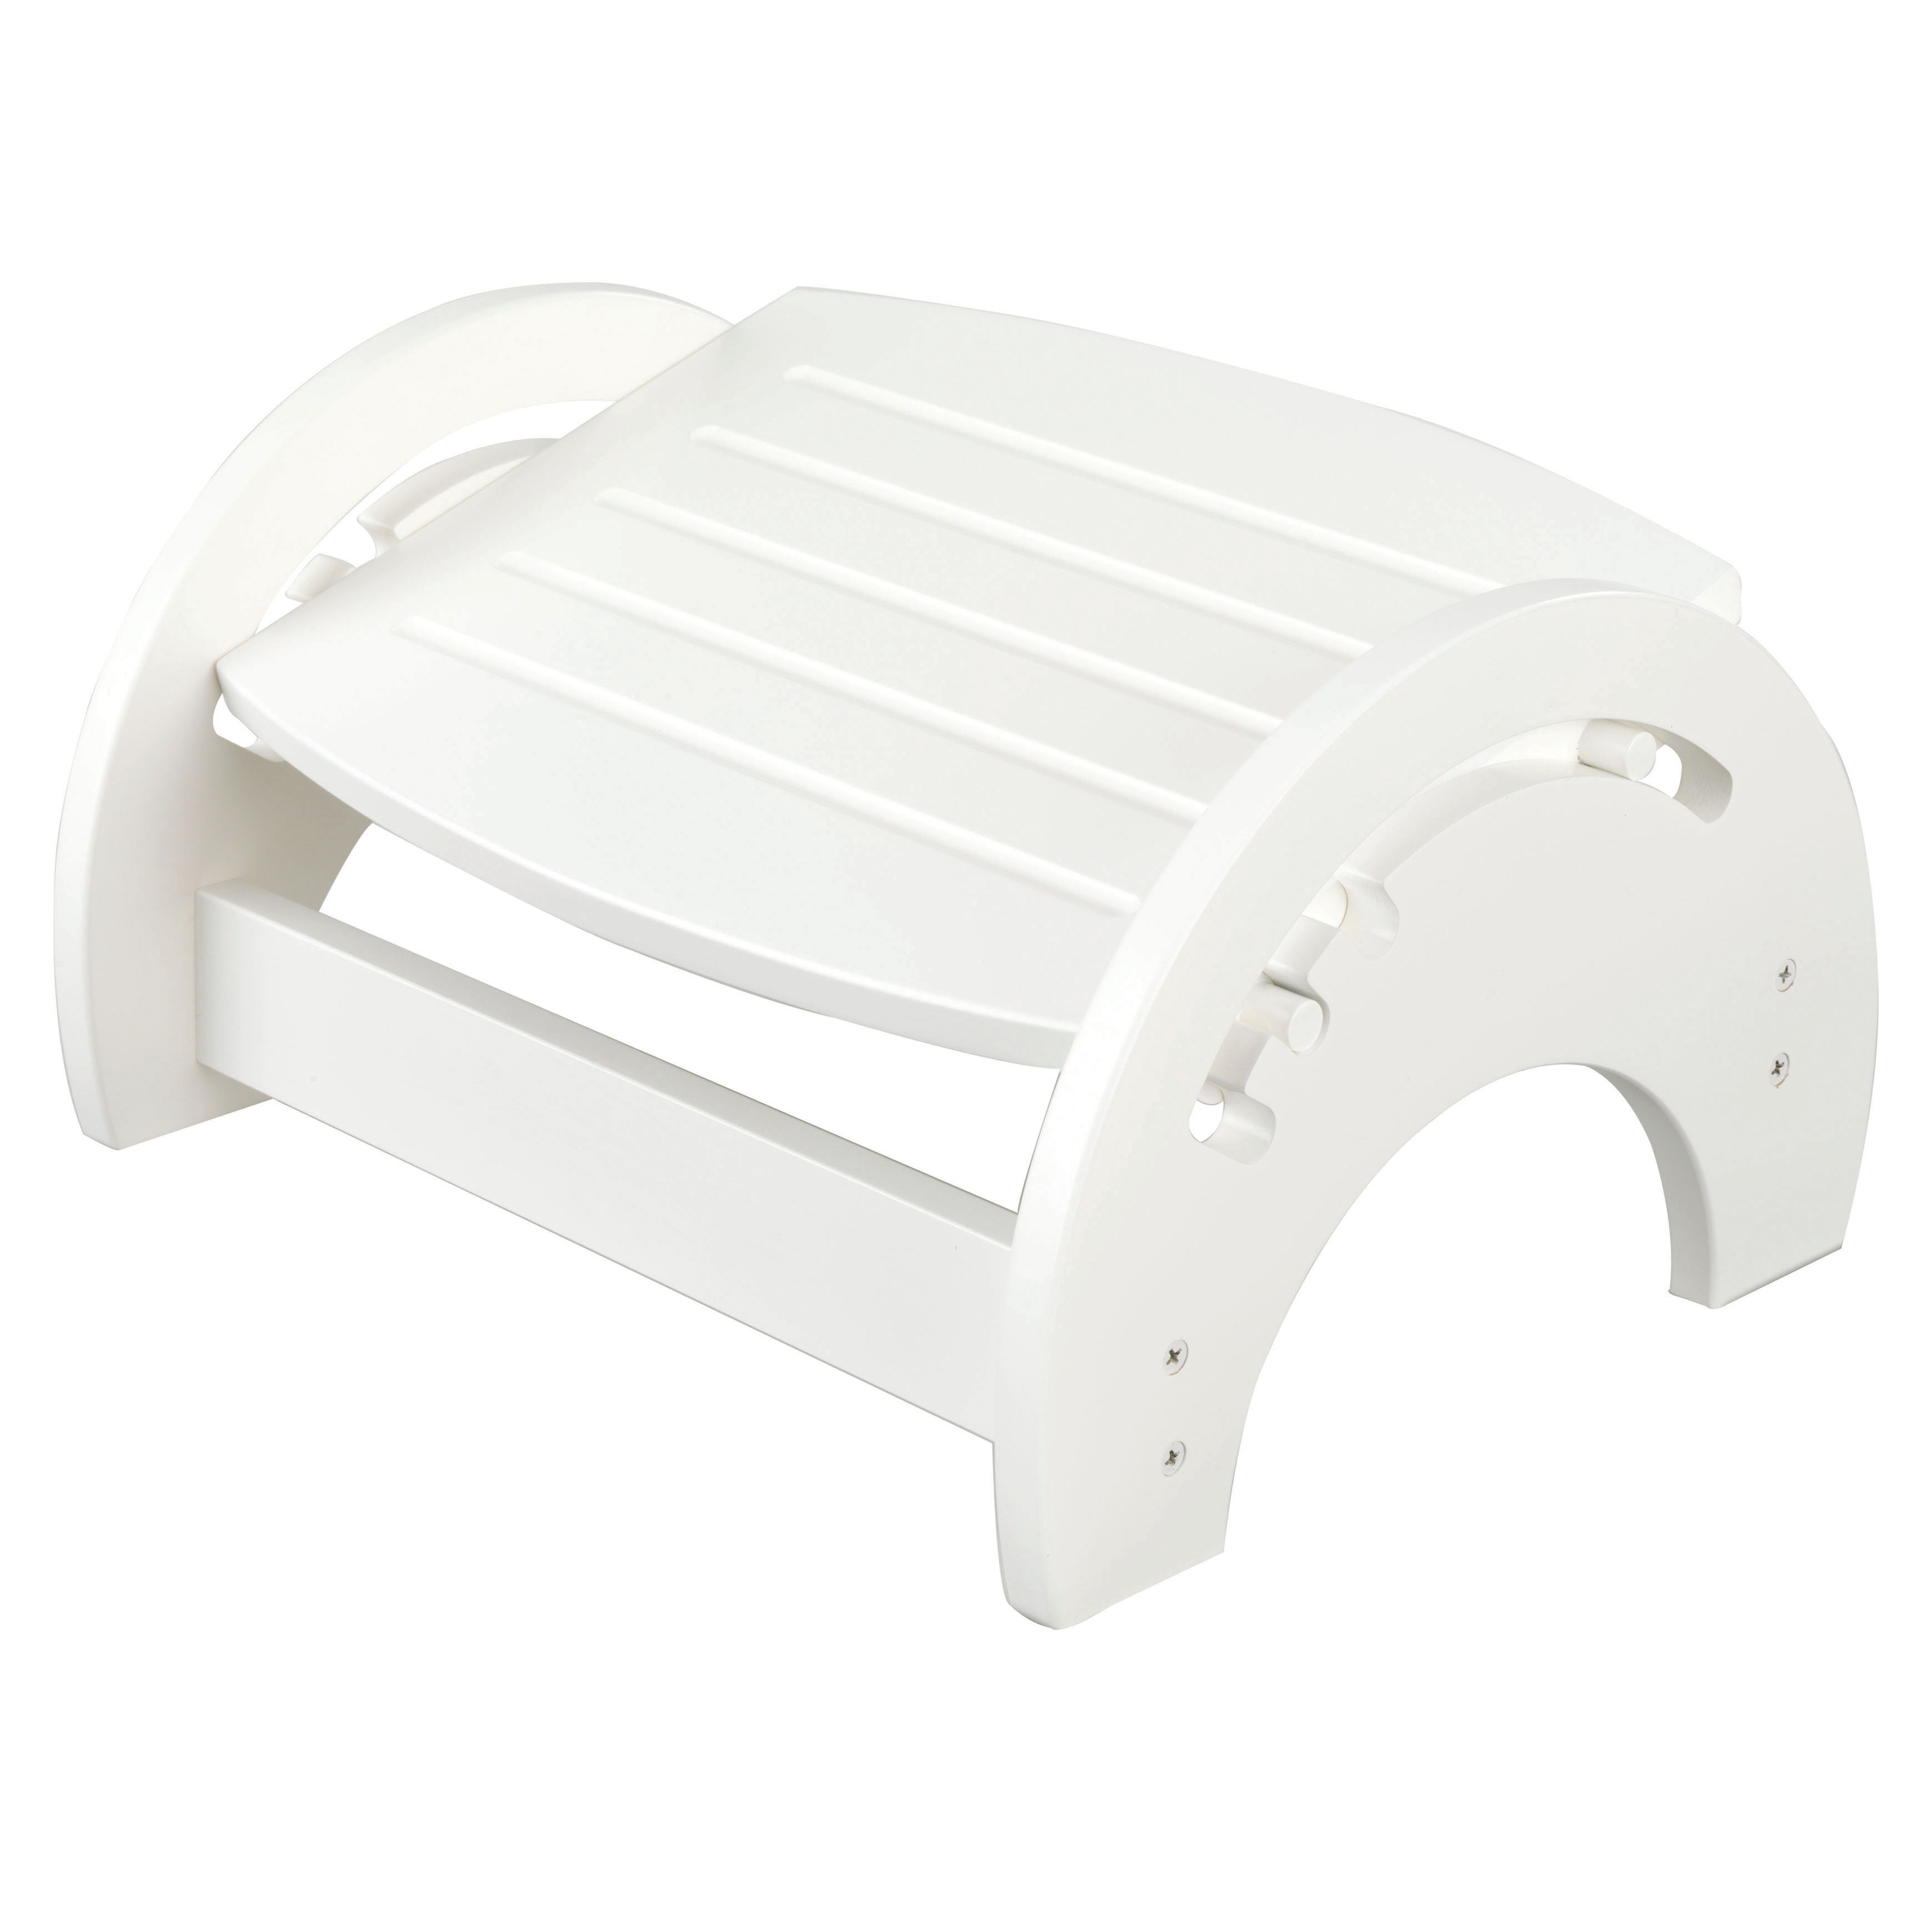 KidKraft Wooden Adjustable Footstool for Nursing with Anti-Slip Pads on Base - White - image 1 of 2